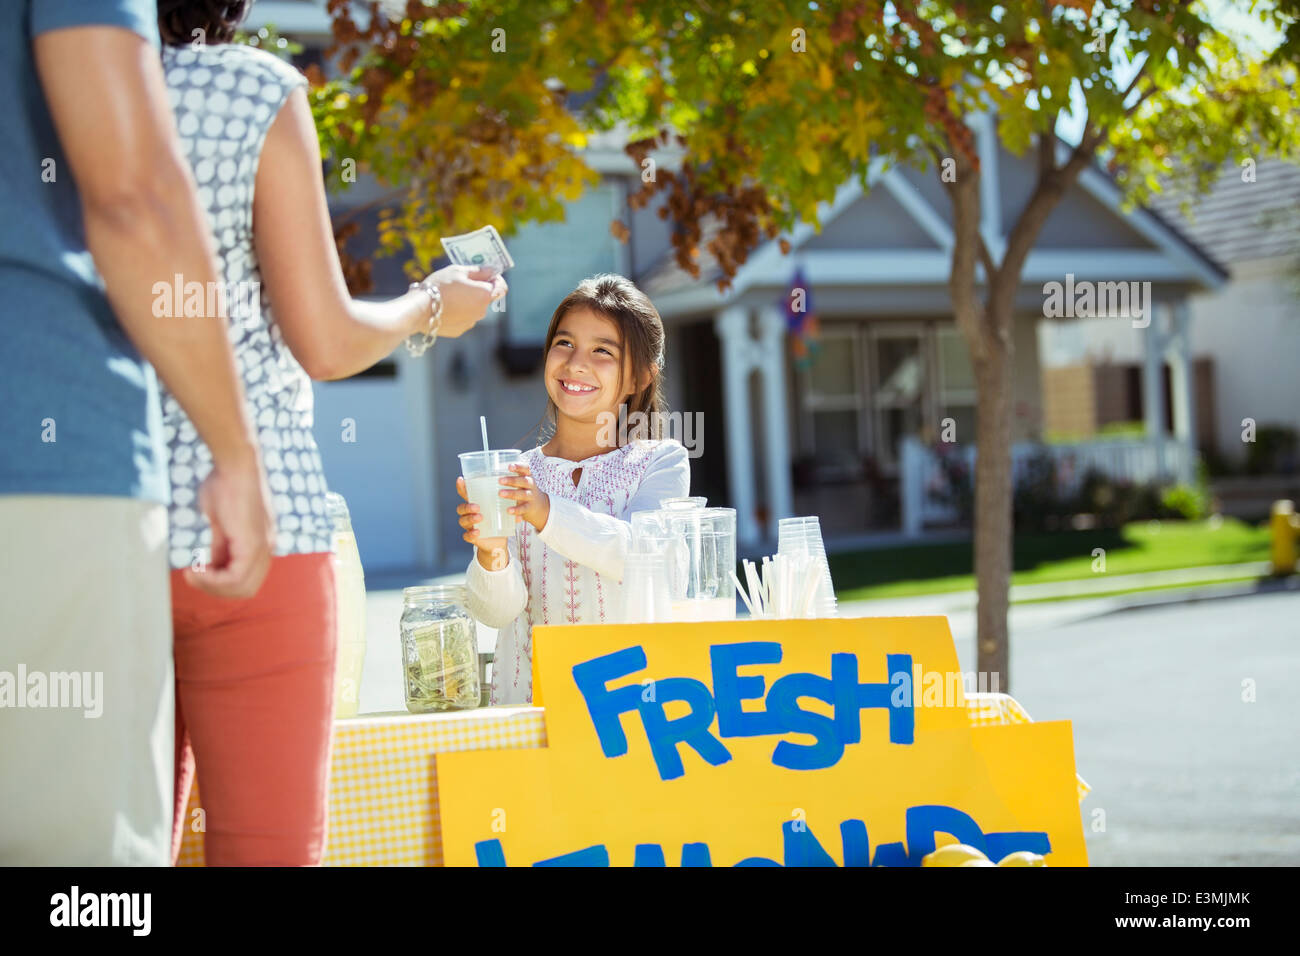 Girl selling lemonade at lemonade stand Stock Photo